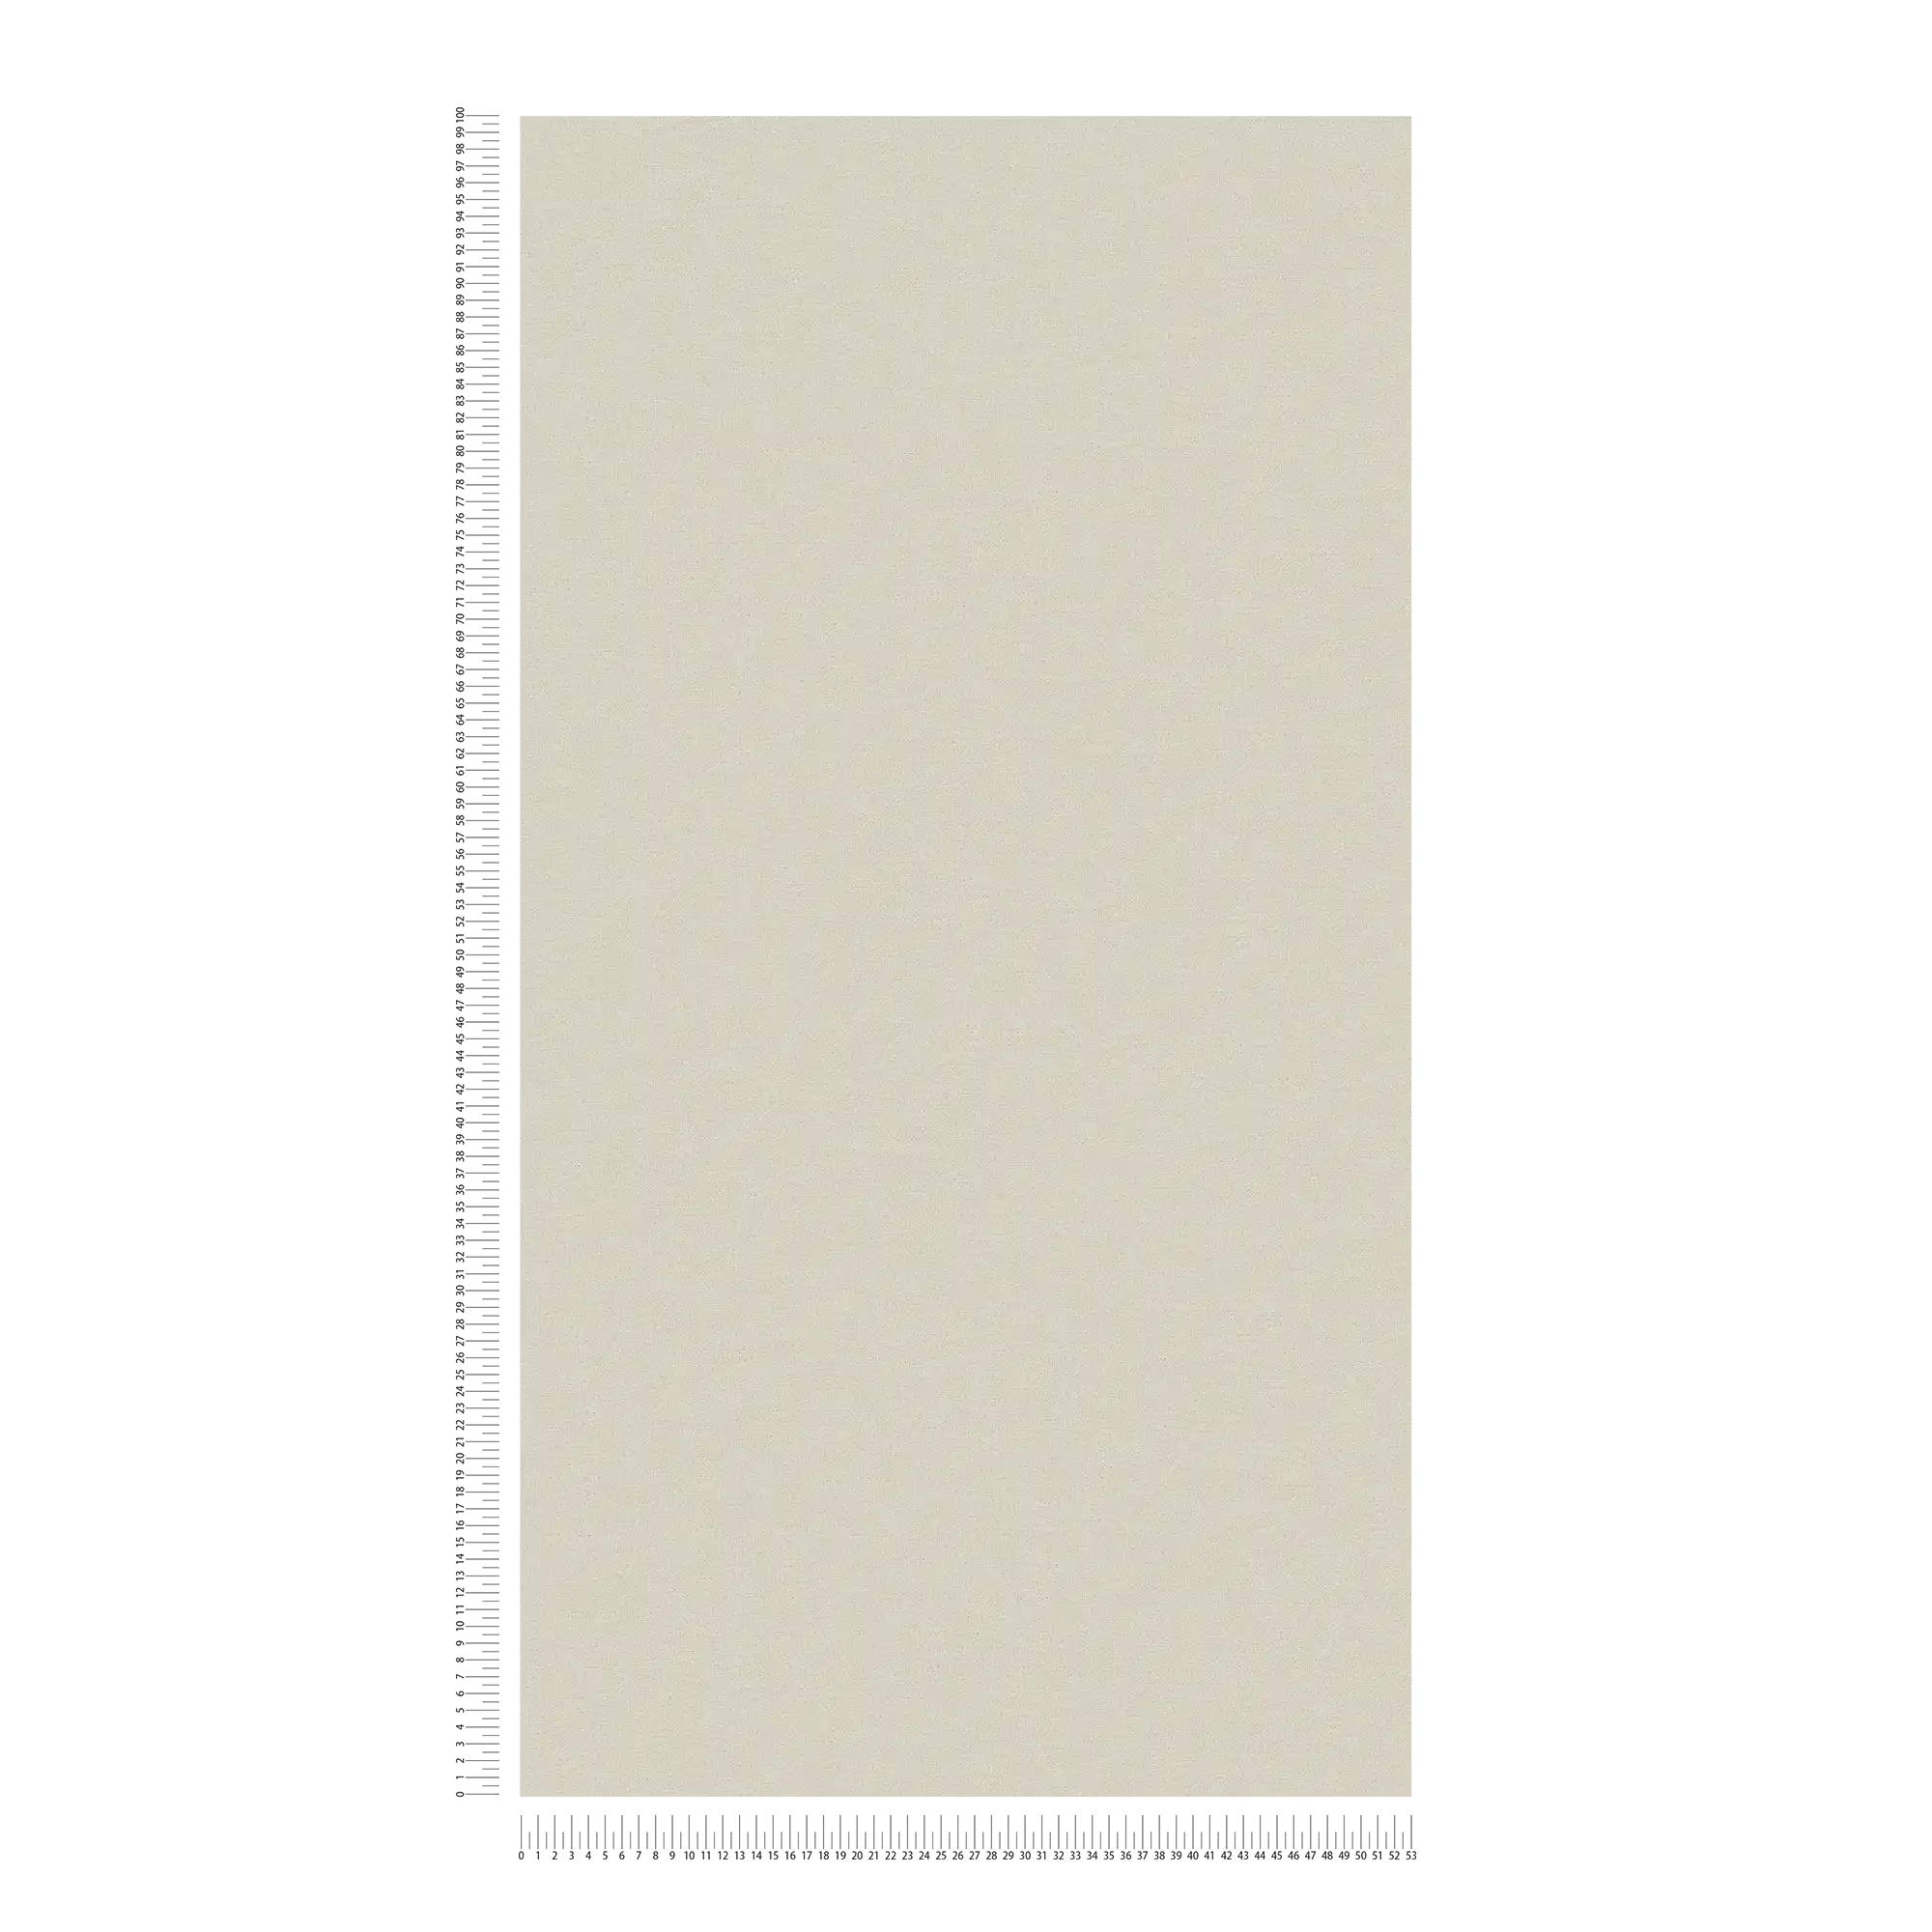             Carta da parati in tessuto non tessuto di MICHALSKY tinta unita, opaca in crema
        